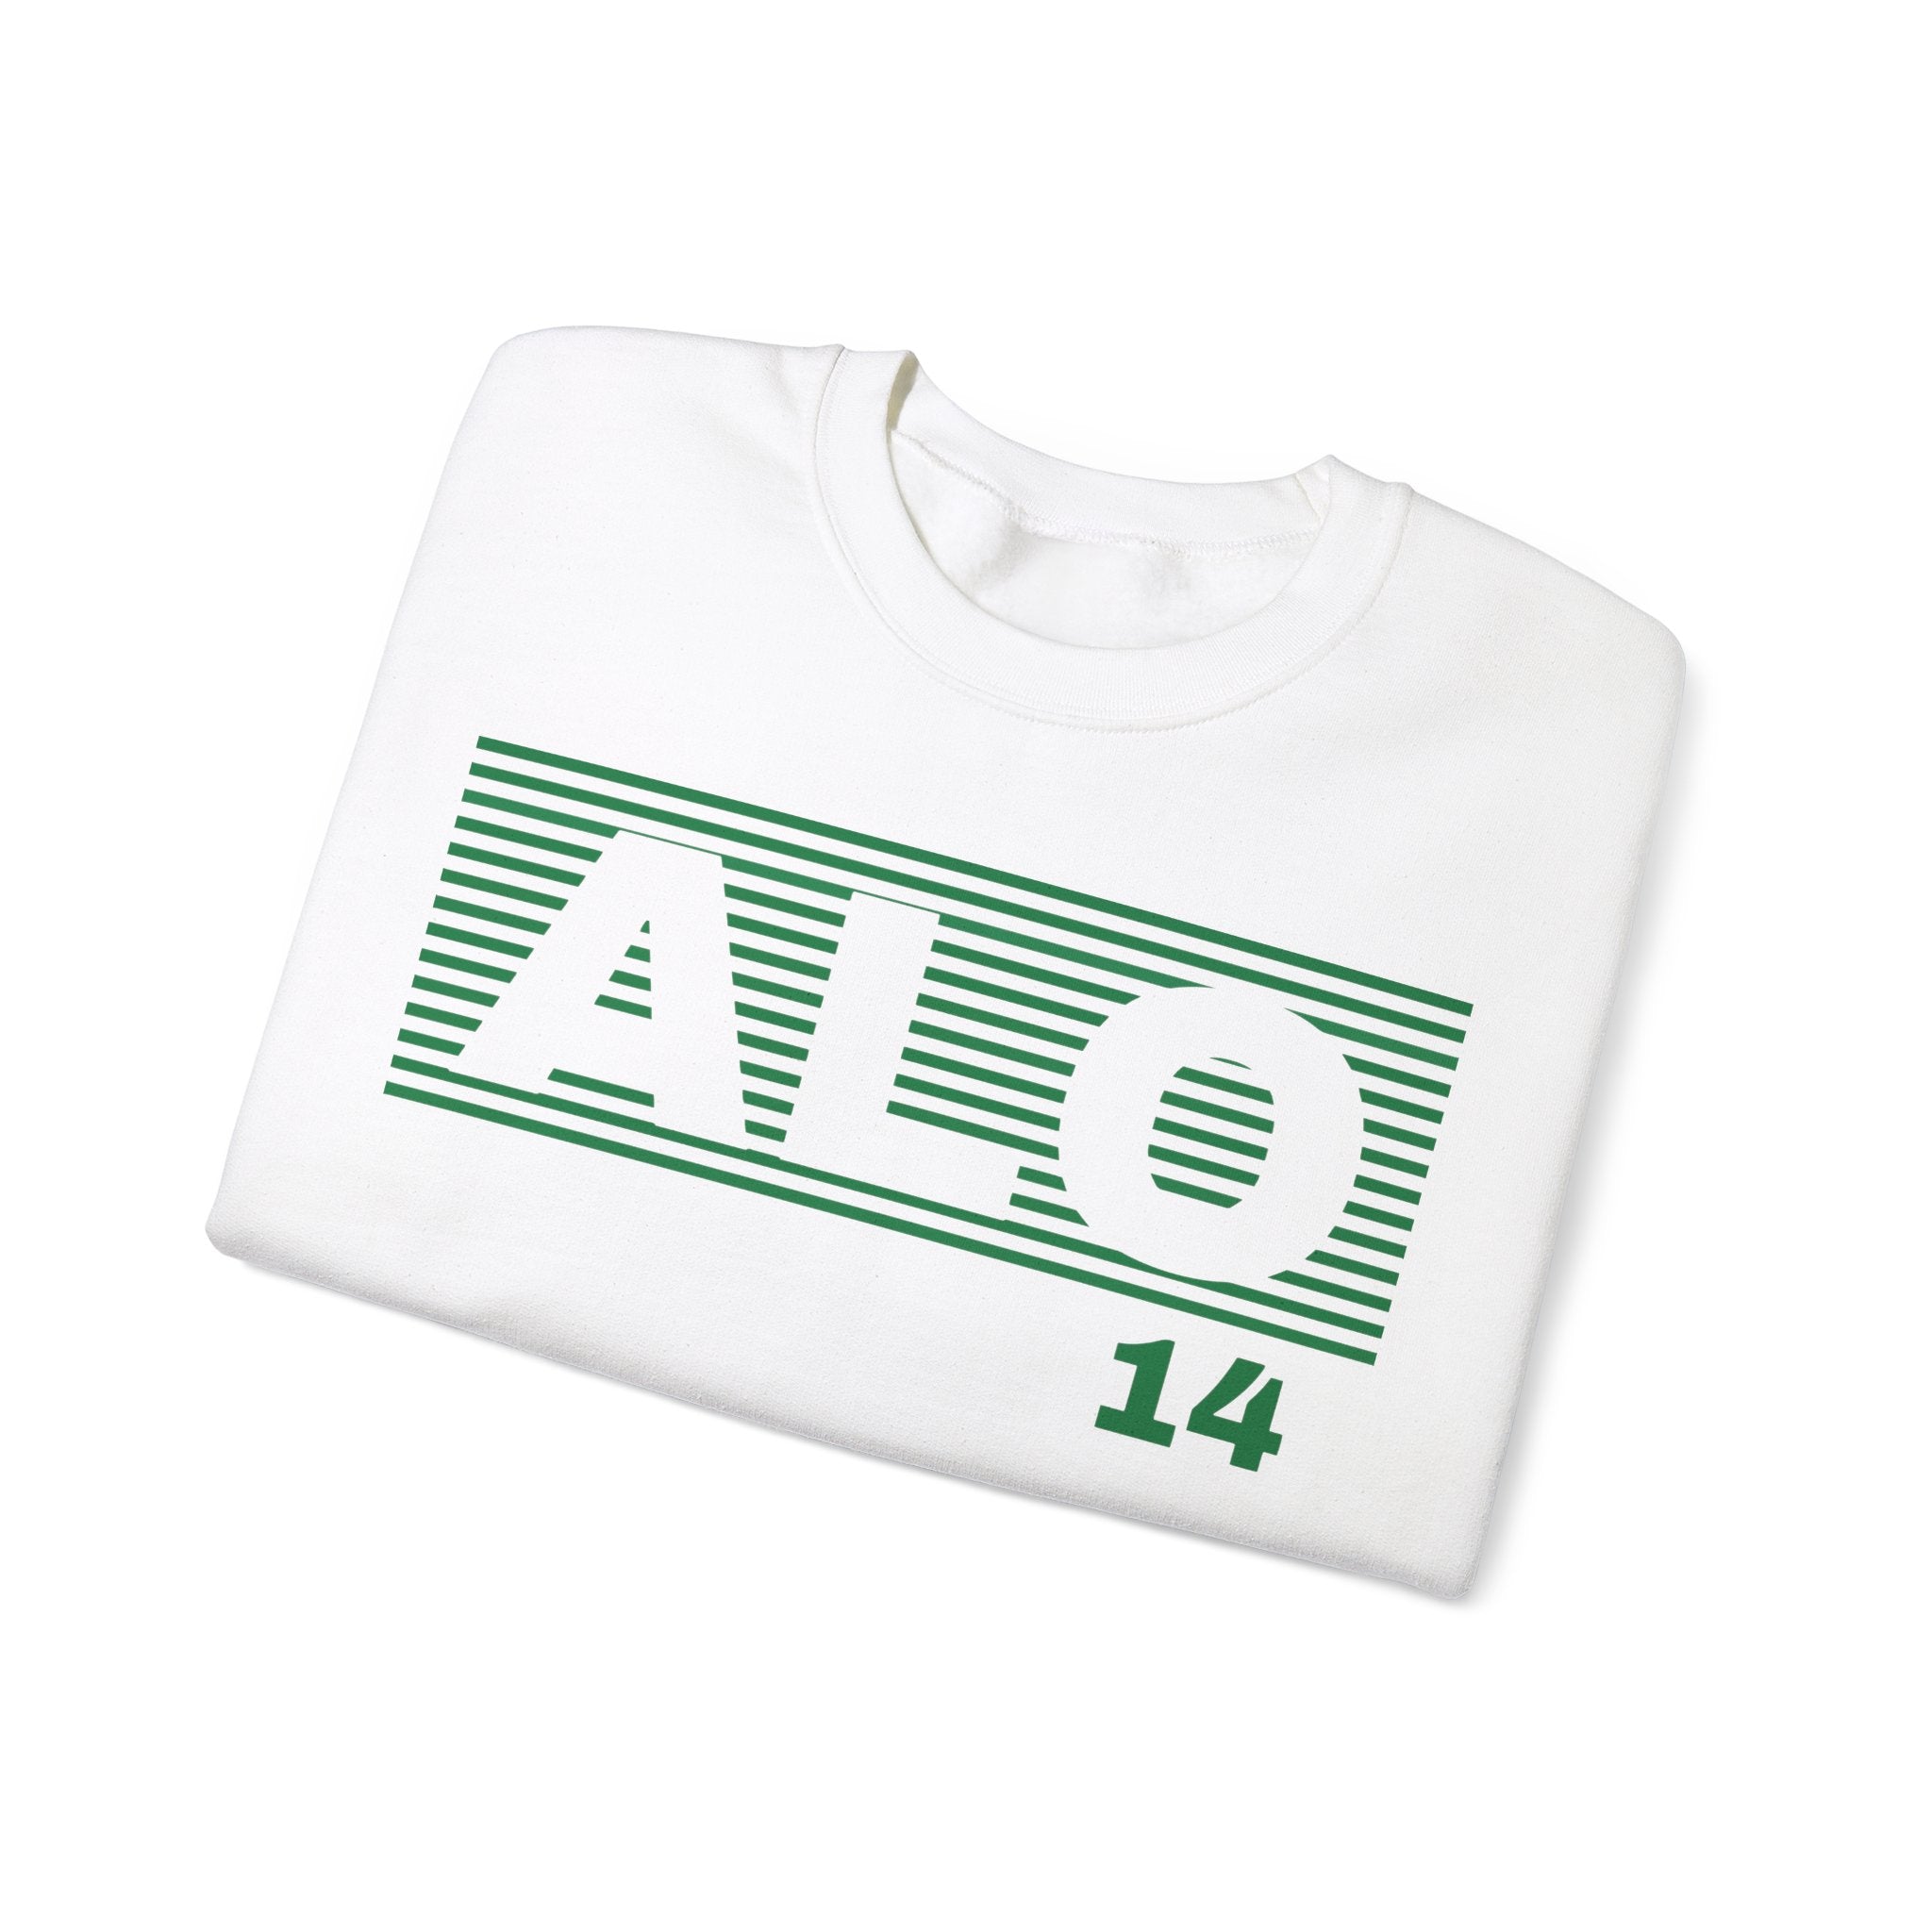 ALO14 Stealth Graphic Sweatshirt - FormulaFanatics